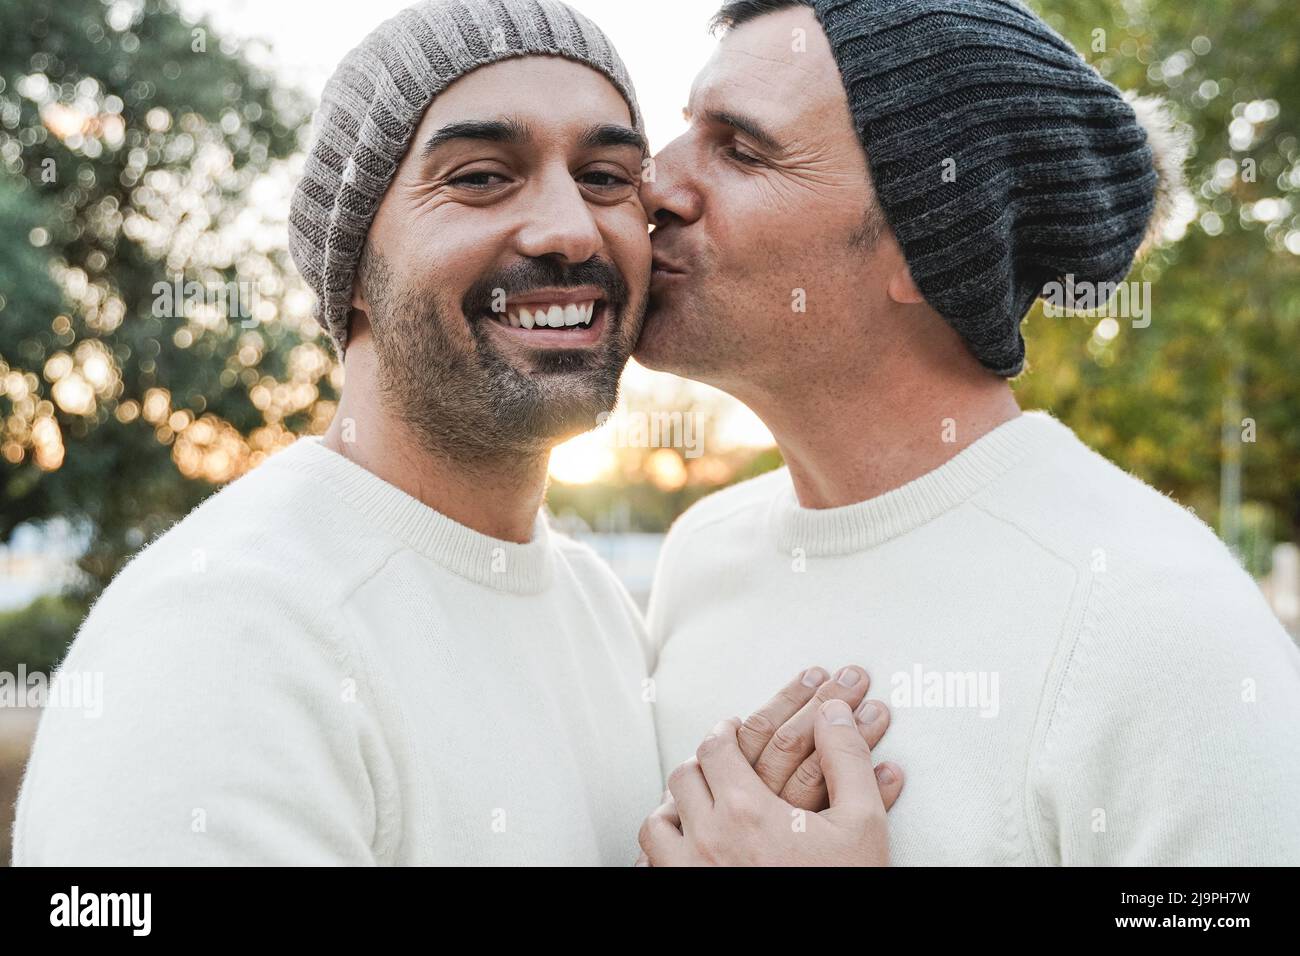 Mature gay men couple having tender moment outdoor - Focus on left man face Stock Photo